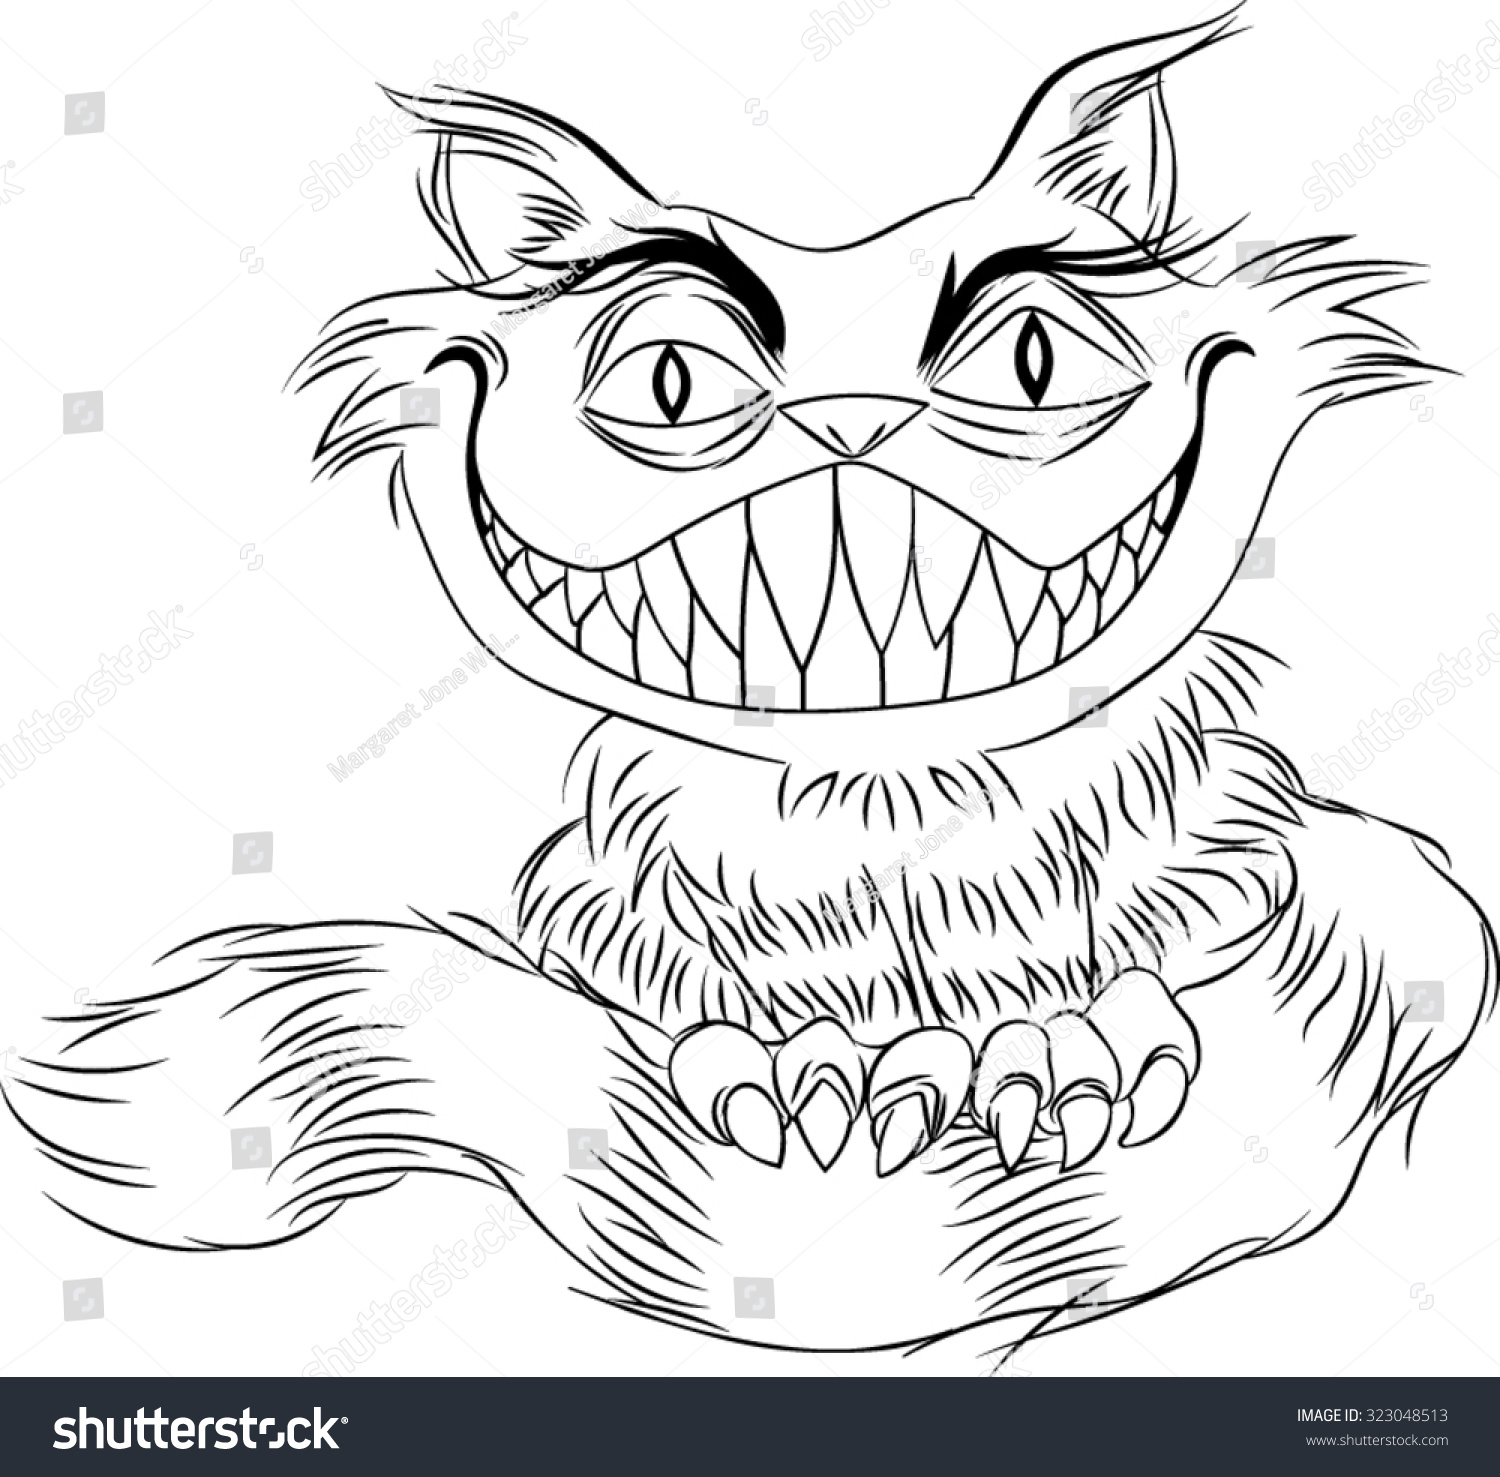 SVG of Cheshire Cat - Vector - Illustration svg